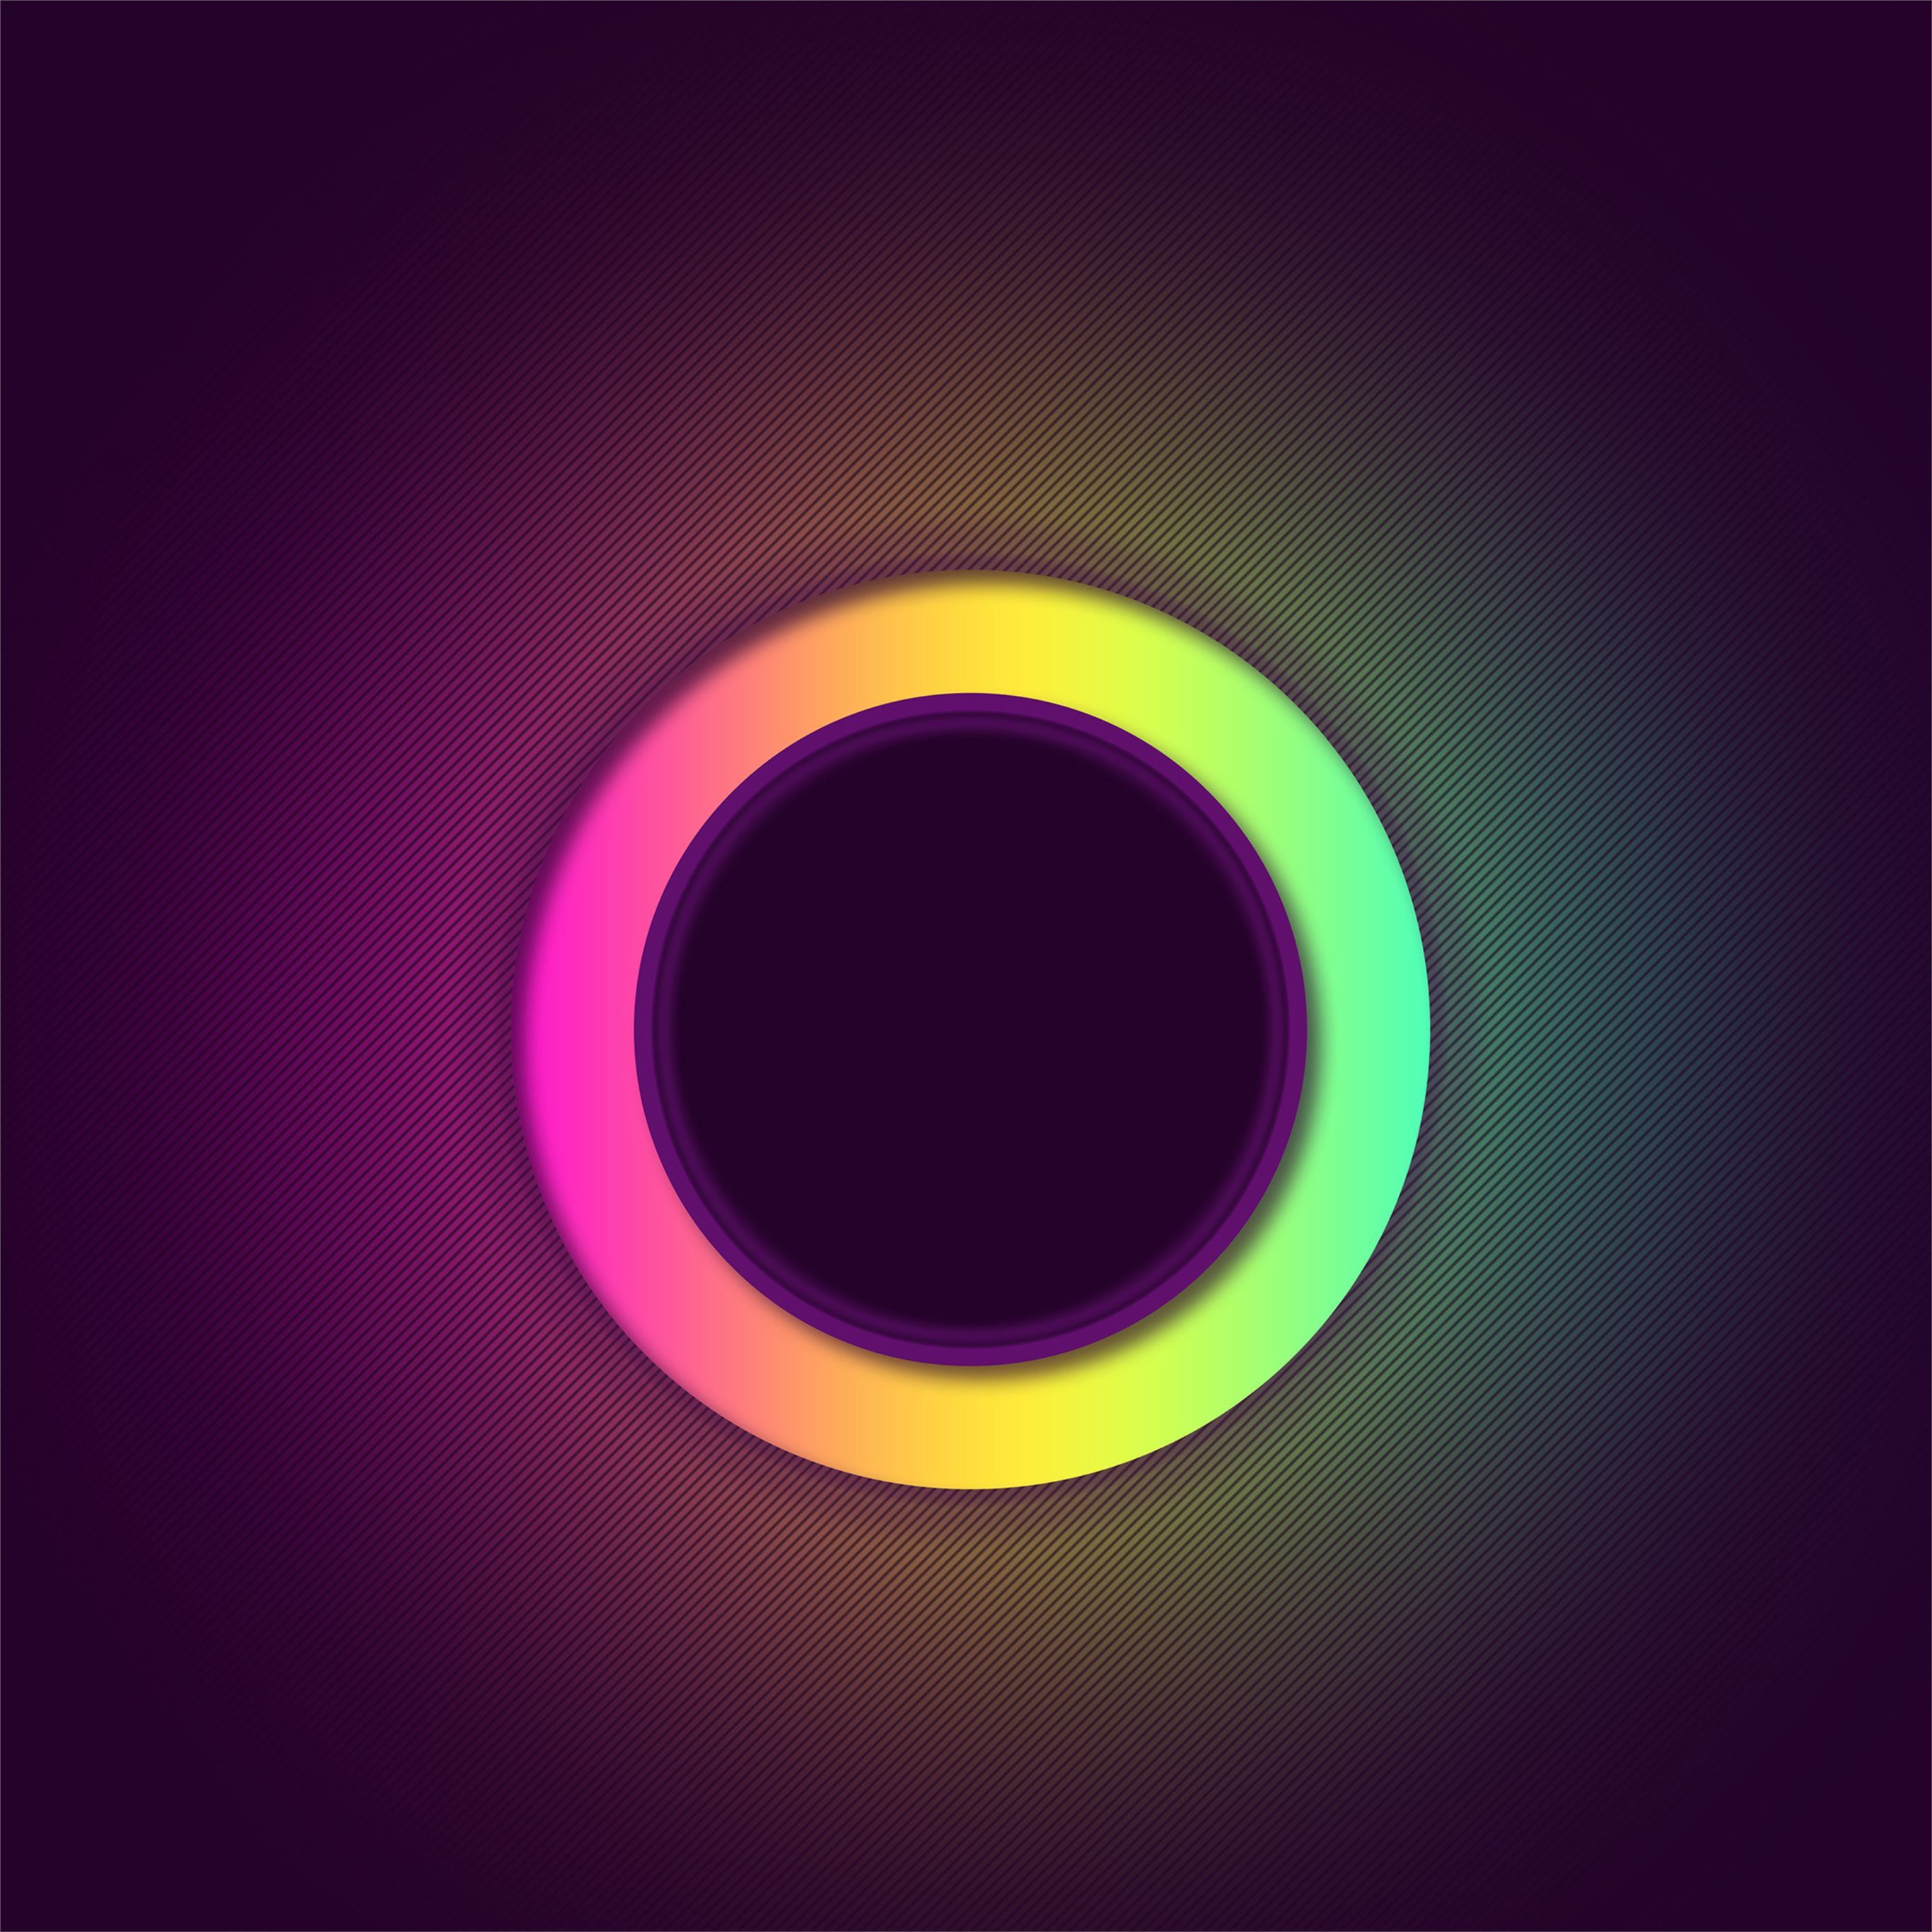 glowing circle abstract 4k iPad Pro Wallpaper Free Download